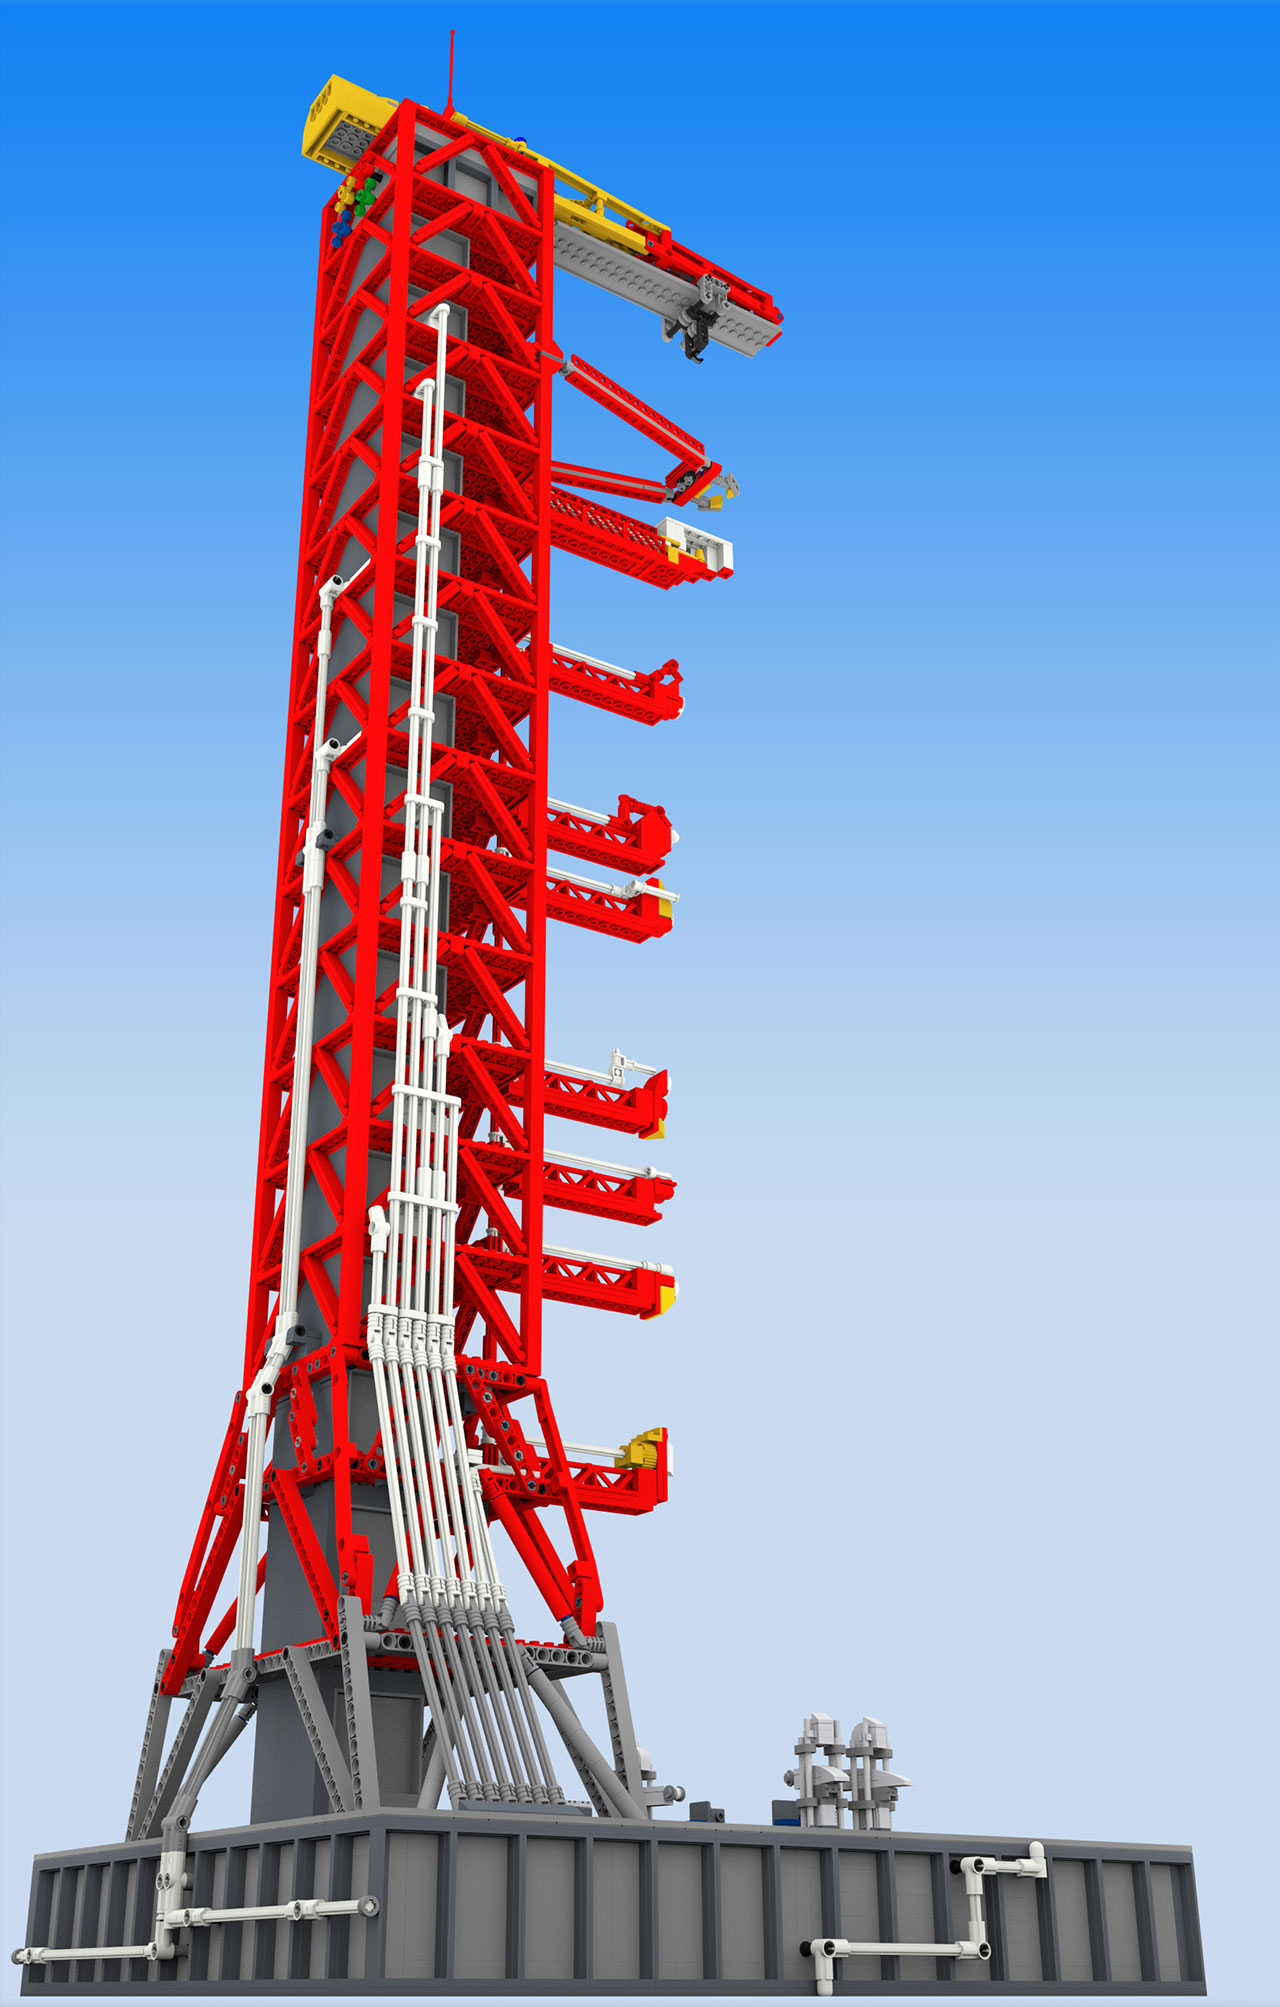 lego ideas saturn v launch tower